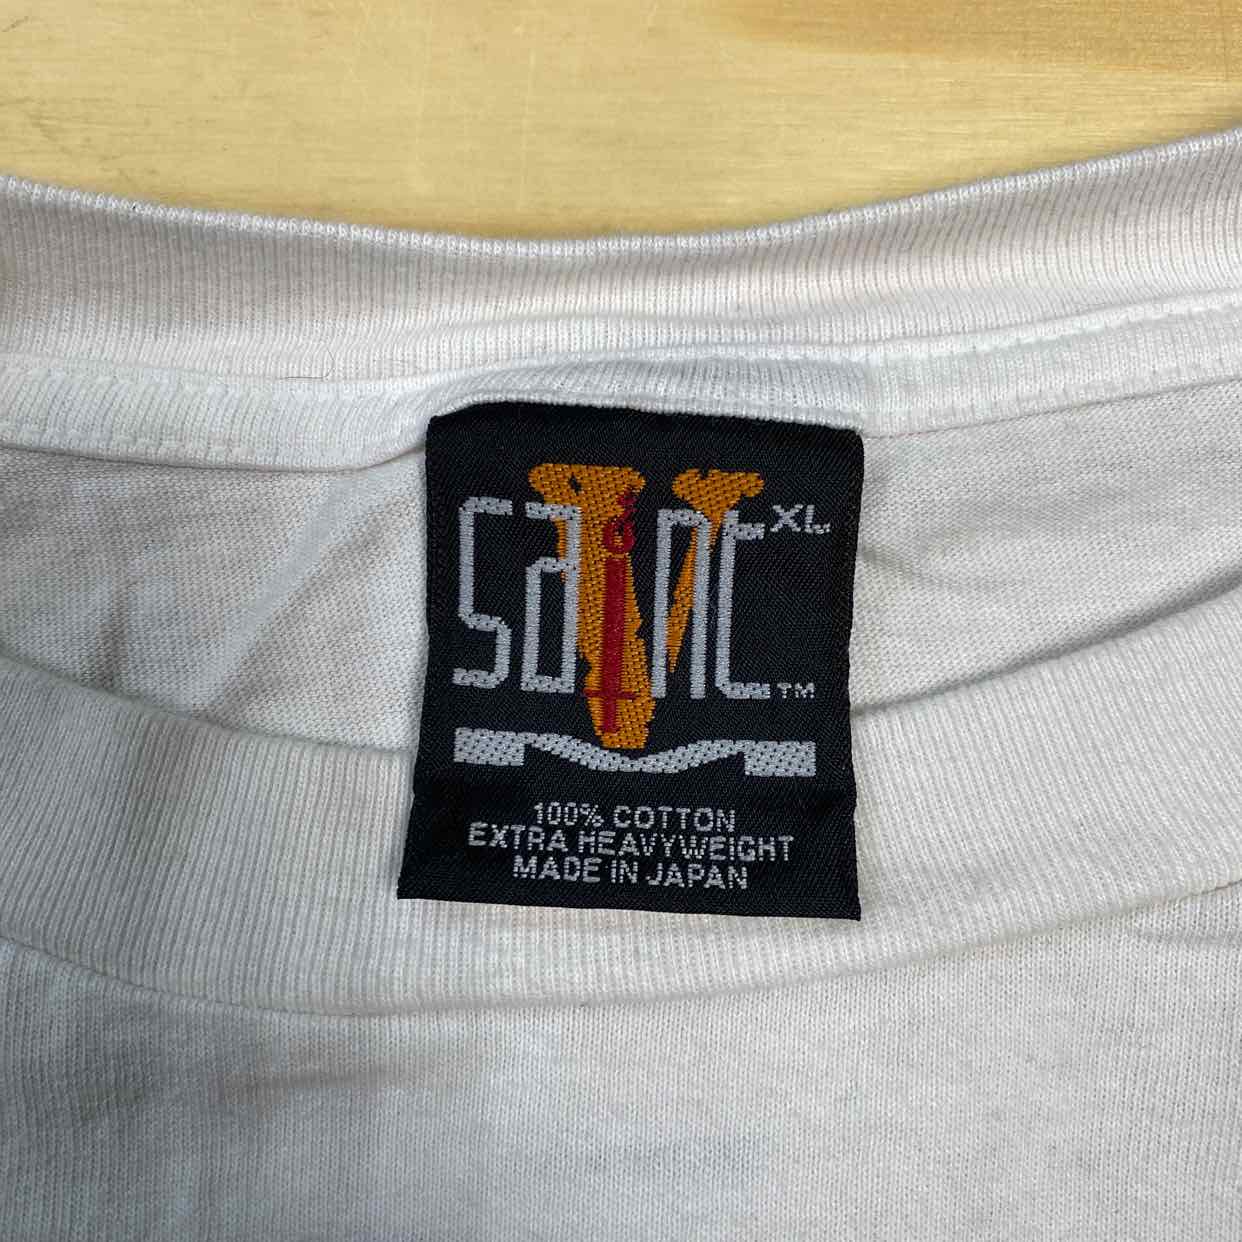 Vlone T-Shirt "NO CAP" White Used Size XL